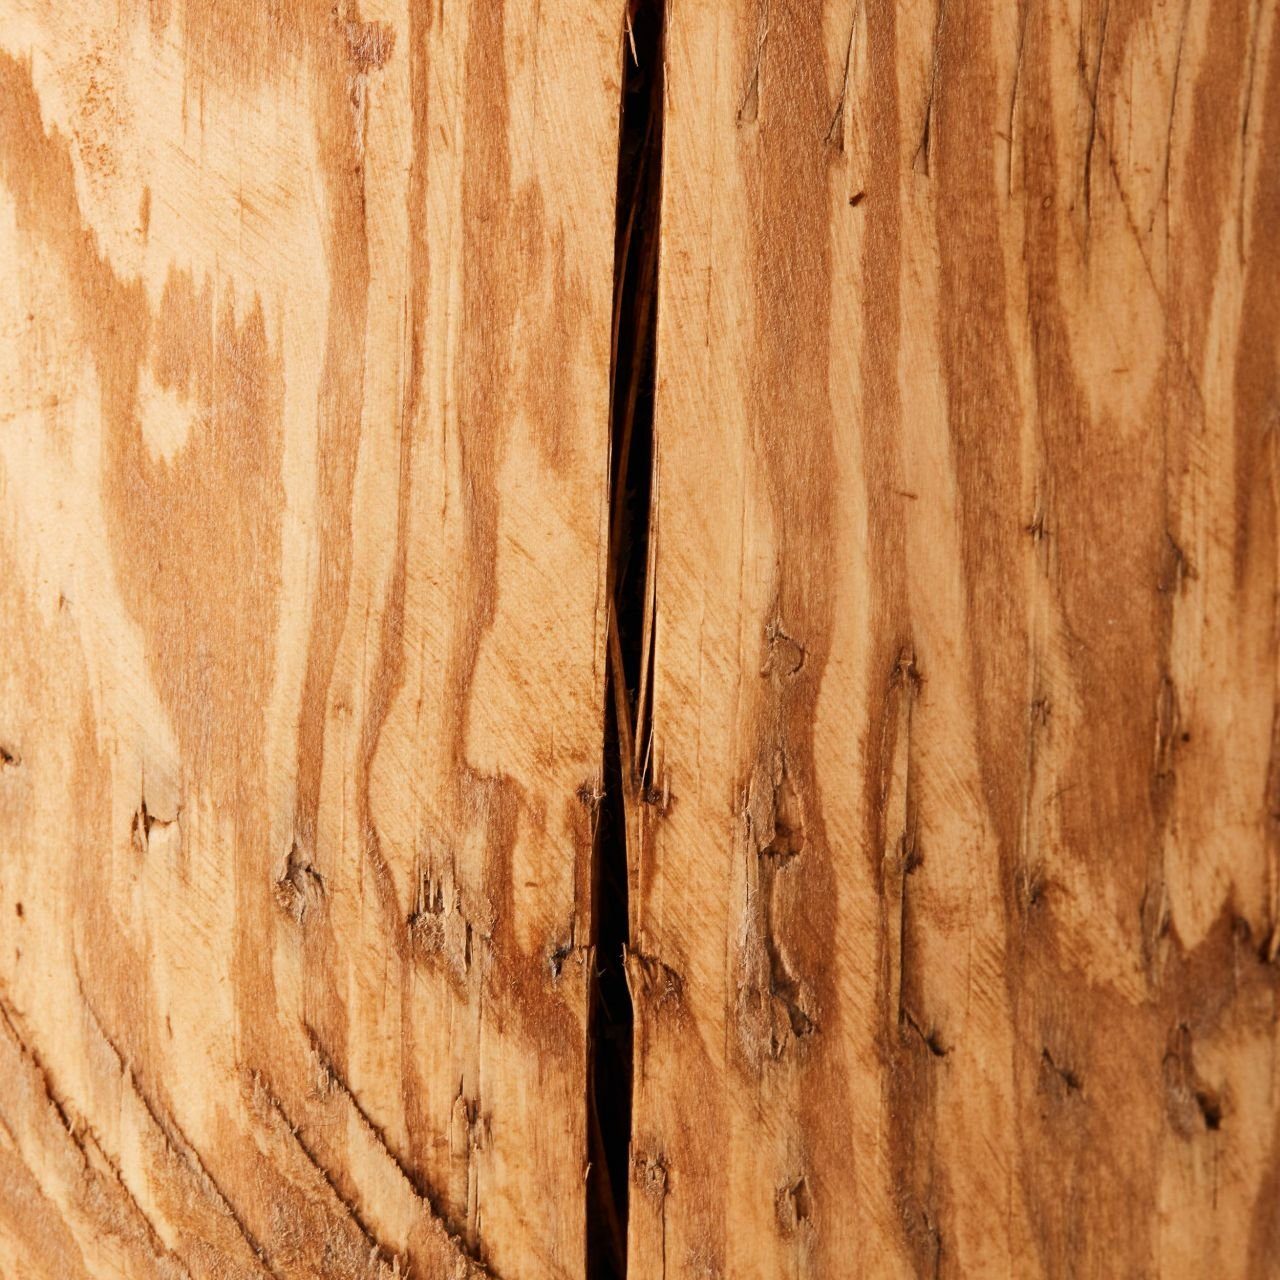 Tischleuchte Trabo, kiefer Holz, 1x 25W 10cm E27, Trabo gebeizt, A60, Brilliant Lampe, Tischleuchte